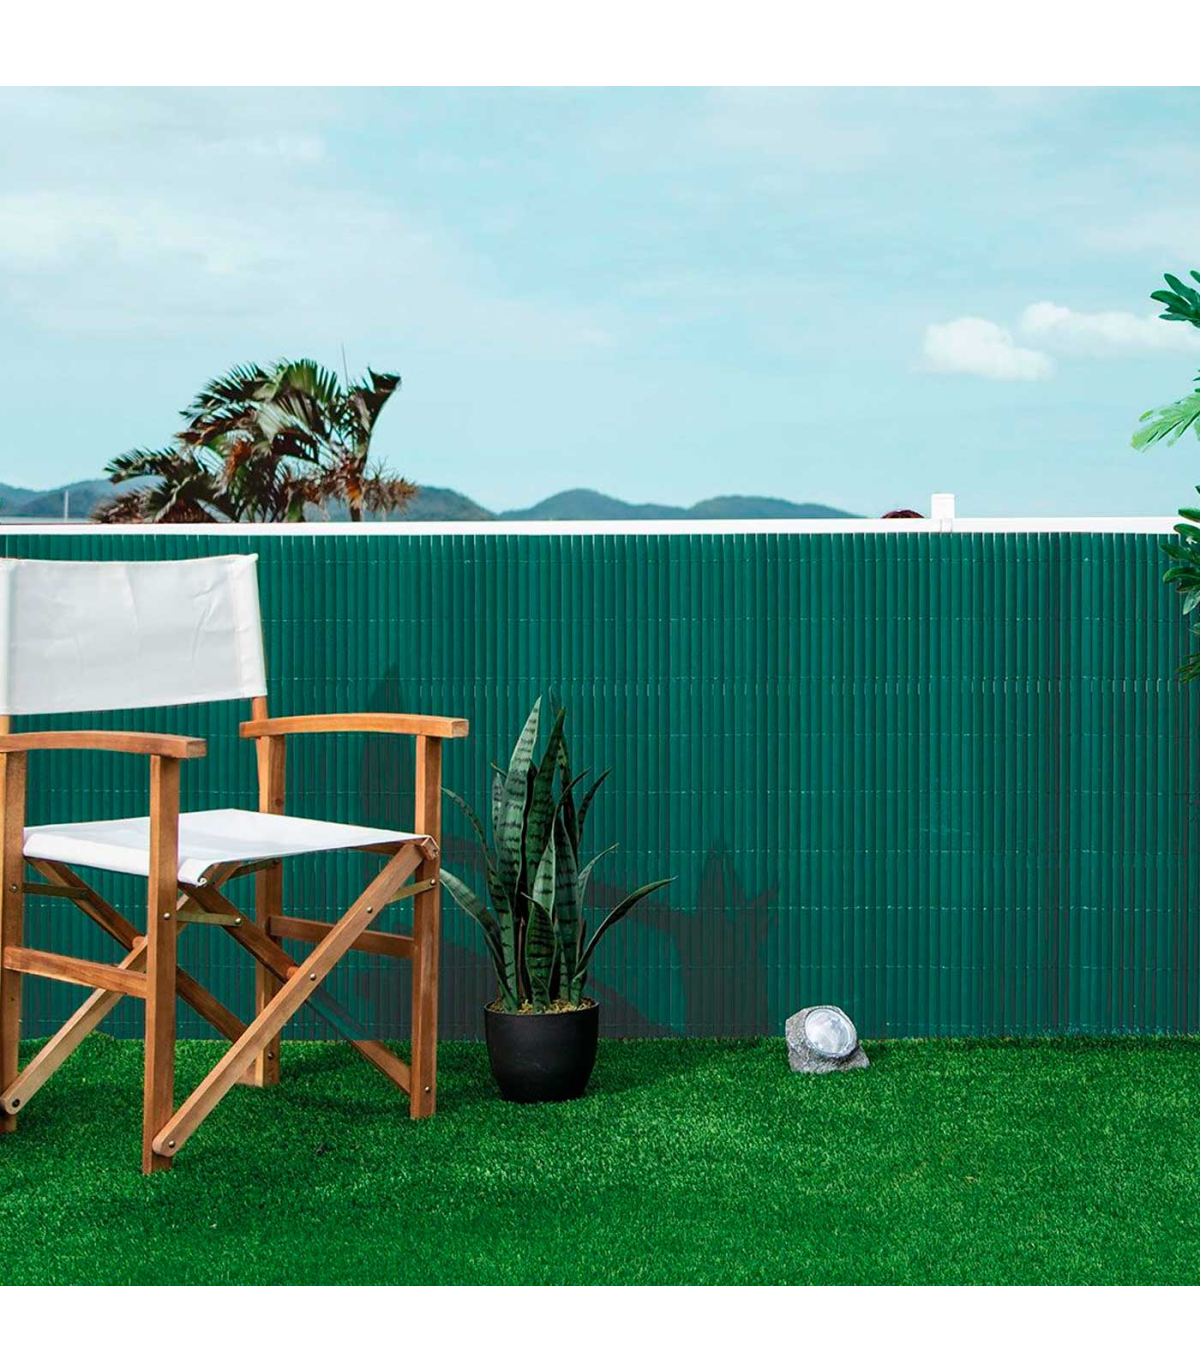 Tradineur - Valla doble cara PVC decorativa de jardín - Borde para césped,  plantas, flores, decoración de exterior - 1 x 3 Metro